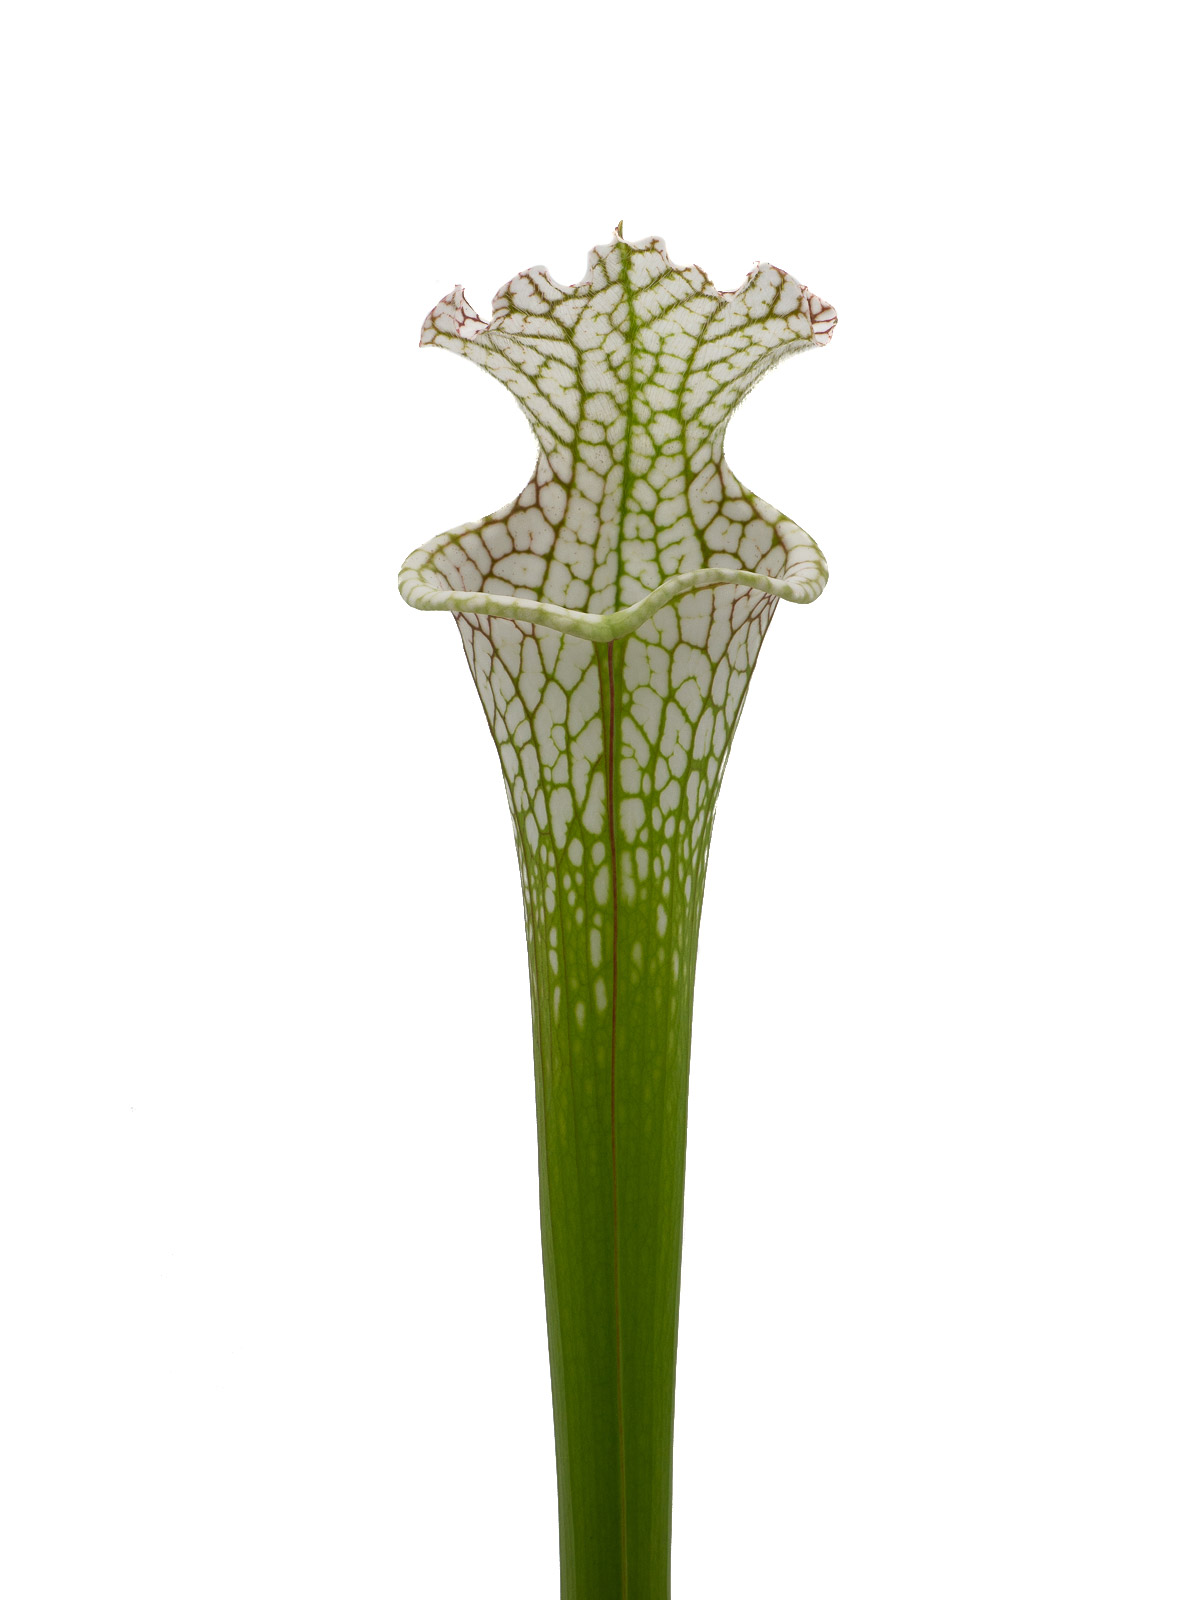 Sarracenia leucophylla - MK L79, Tibbee, Washington County, Alabama